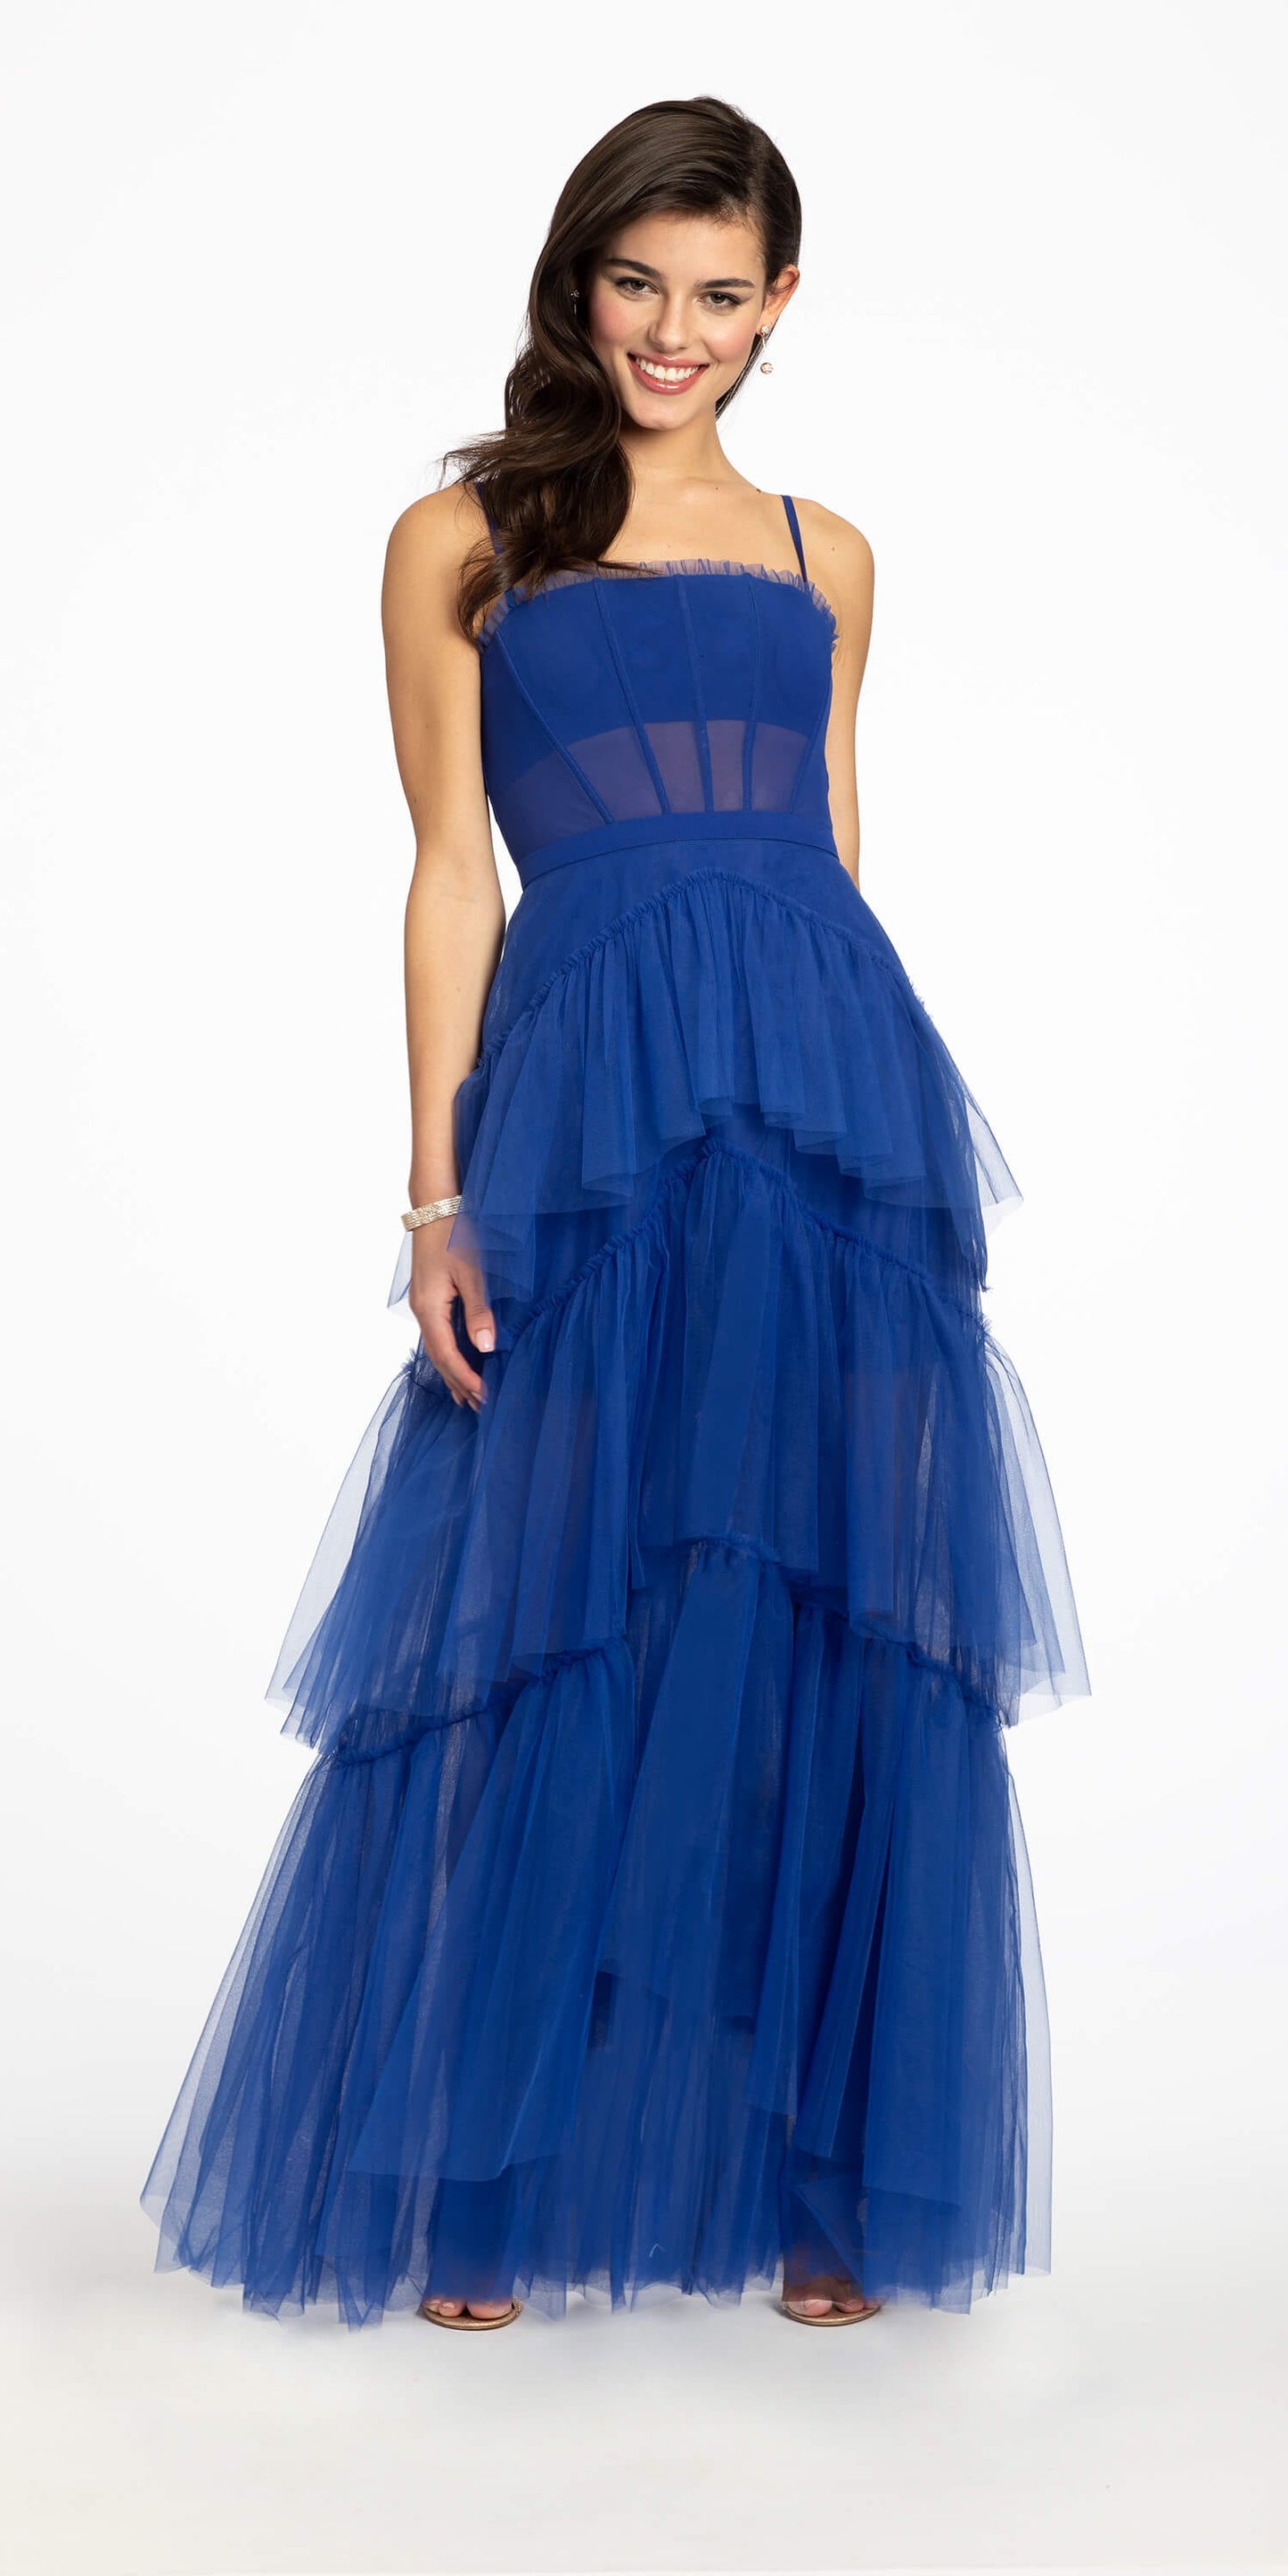 Camille La Vie Sheer Mesh Corset Tiered A Line Dress missy / 2 / blue